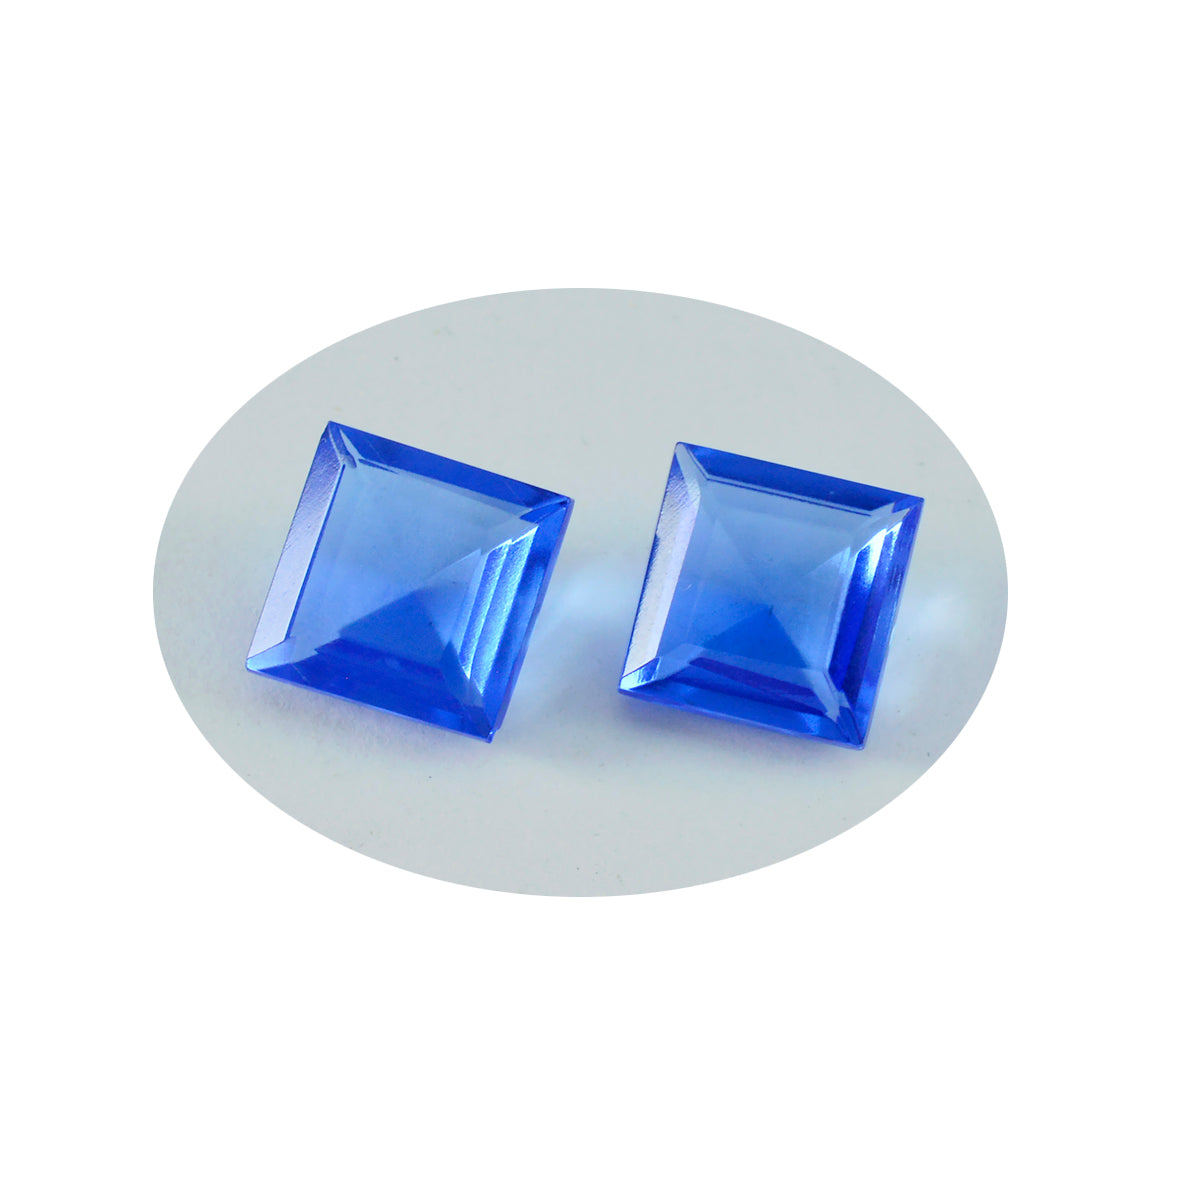 Riyogems 1 pieza zafiro azul CZ facetado 14x14mm forma cuadrada gema de buena calidad